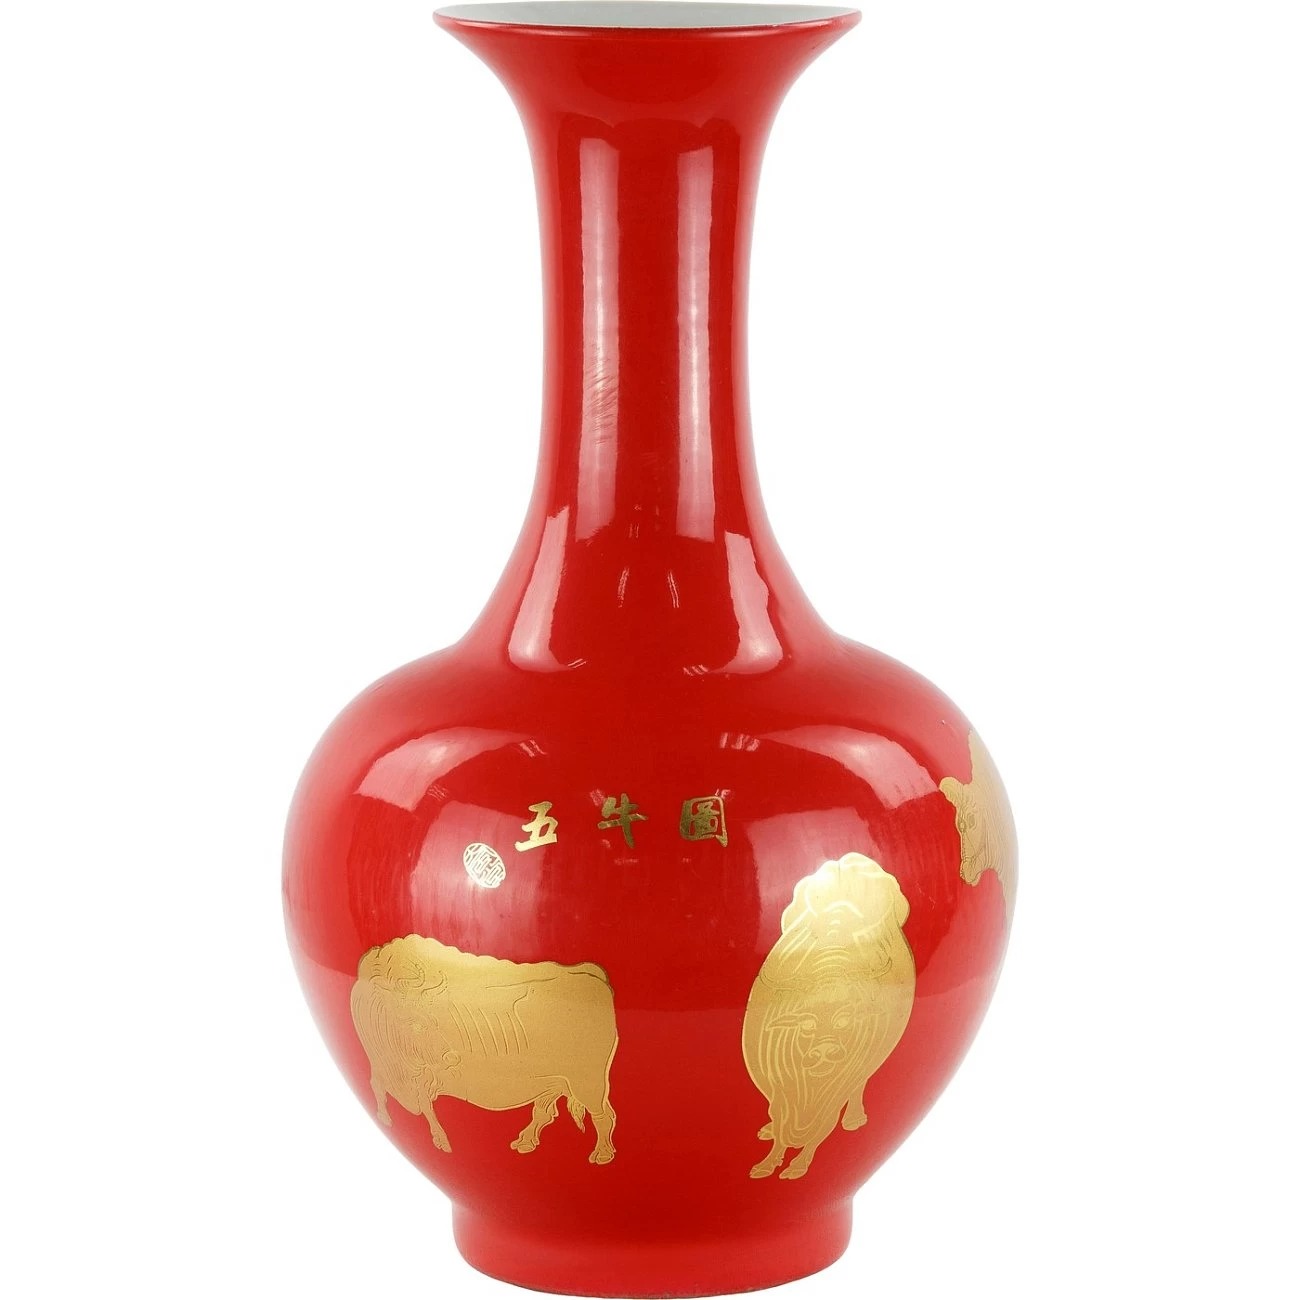 Ваза Glasar фарфоровая красная с быками 27х27х49 см ваза glasar фарфоровая на бронзовом основании 18x18x30см